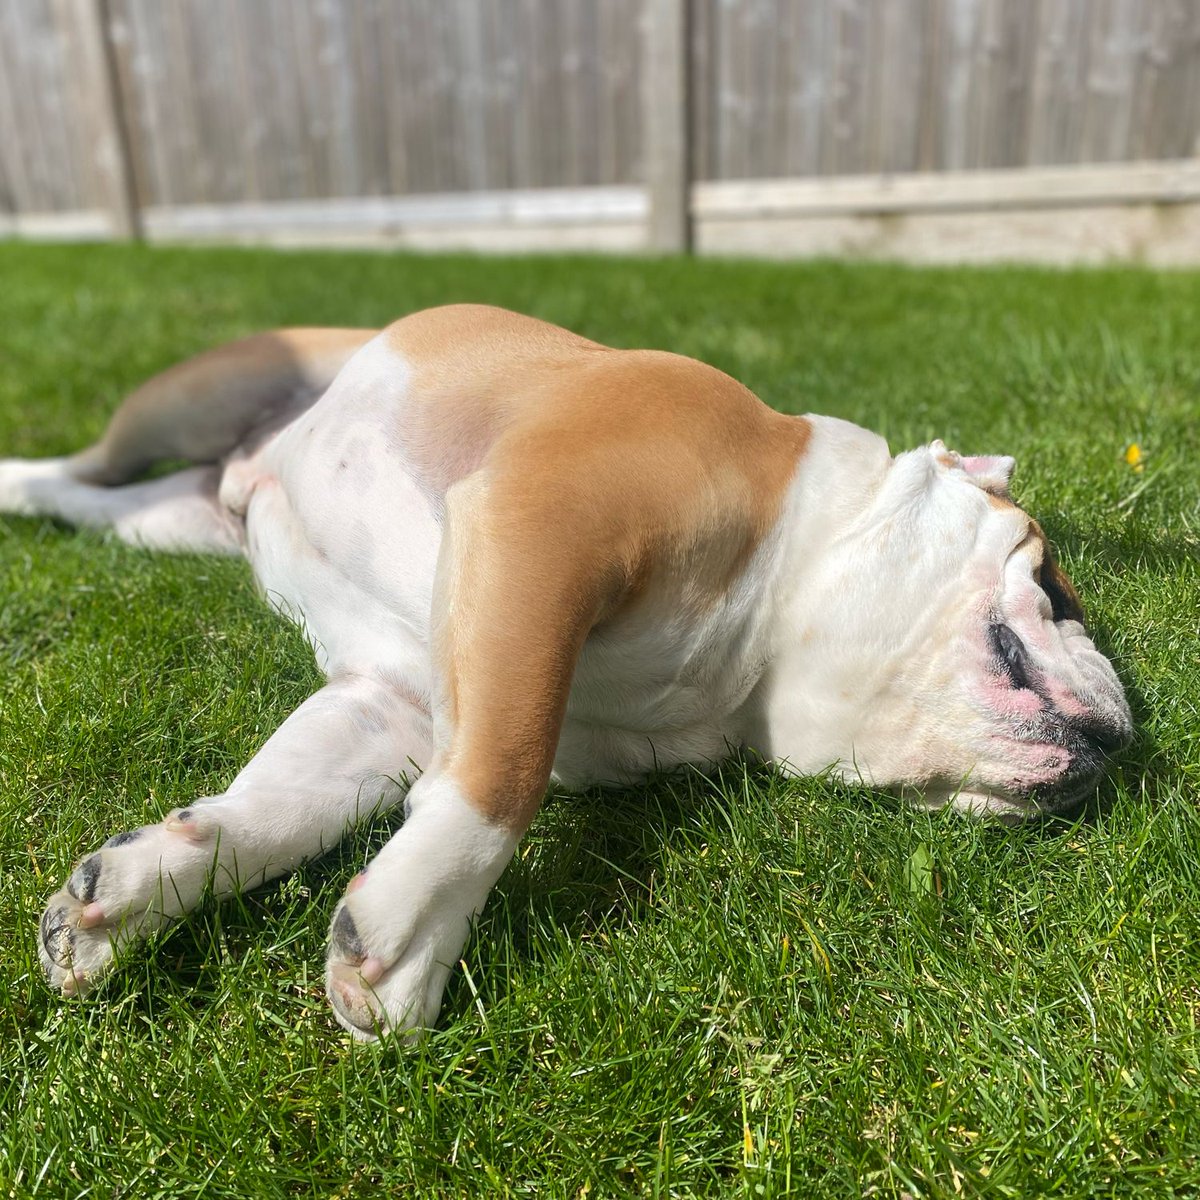 Taking full advantage of #WontLookWednesday to get in some #Sunbathing ☀️ time - have a great day and enjoy a sun puddle if you’ve got one 🐶🐾❤️ Barney #BarneyTheBulldog #DogsOfTwitter #DogsOfX #DogsOfIG #DogsOfFacebook #Bulldog #EnglishBulldog #Sun #WLW